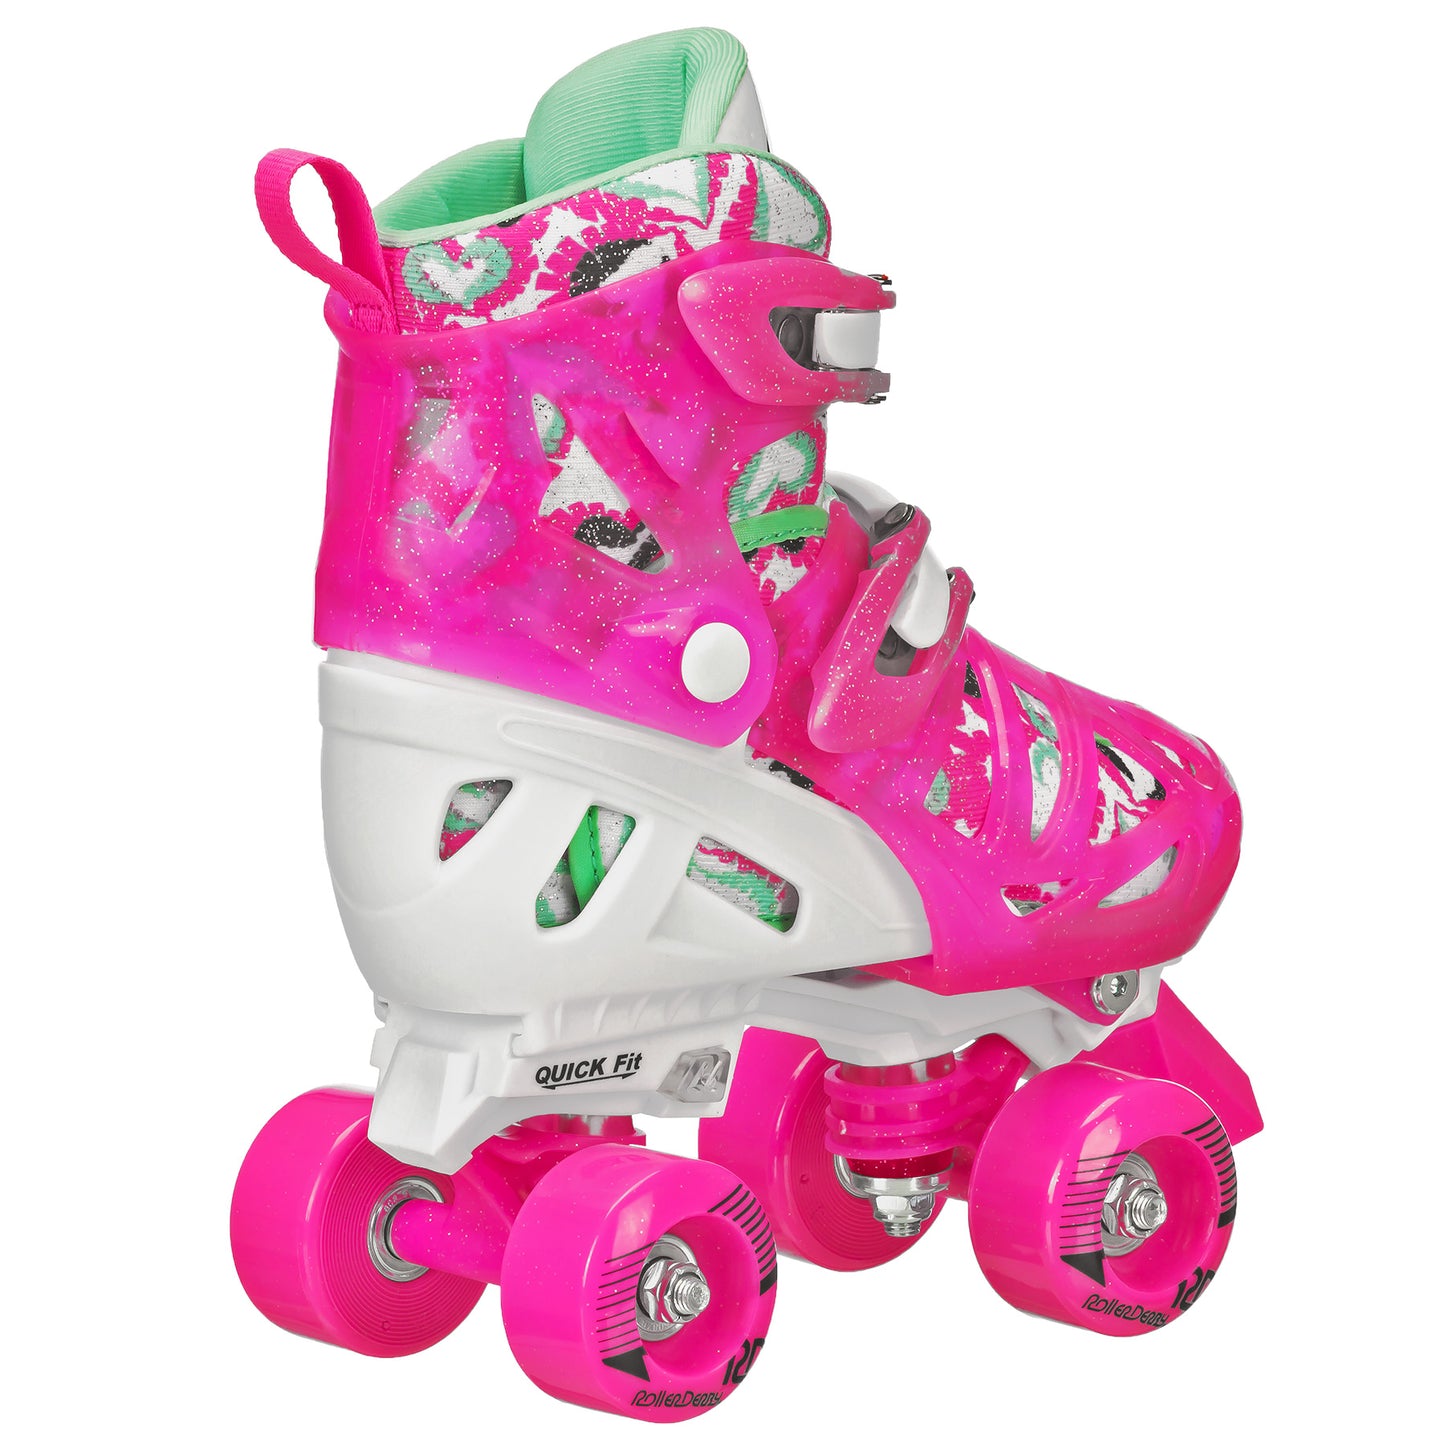 Trac Star Youth Girl's Adjustable Roller Skates